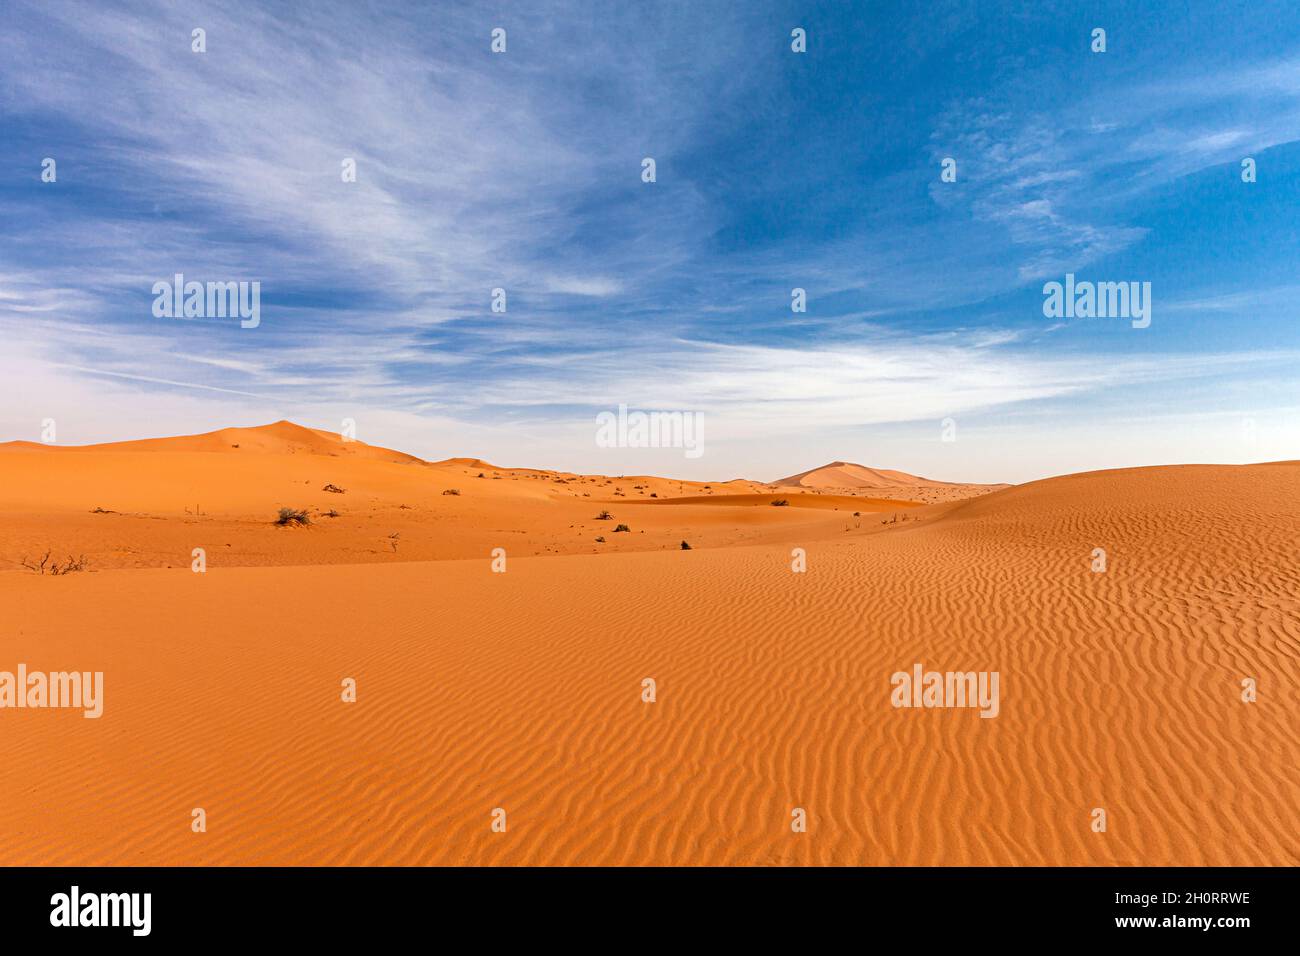 Sand dunes in the desert, Saudi Arabia Stock Photo